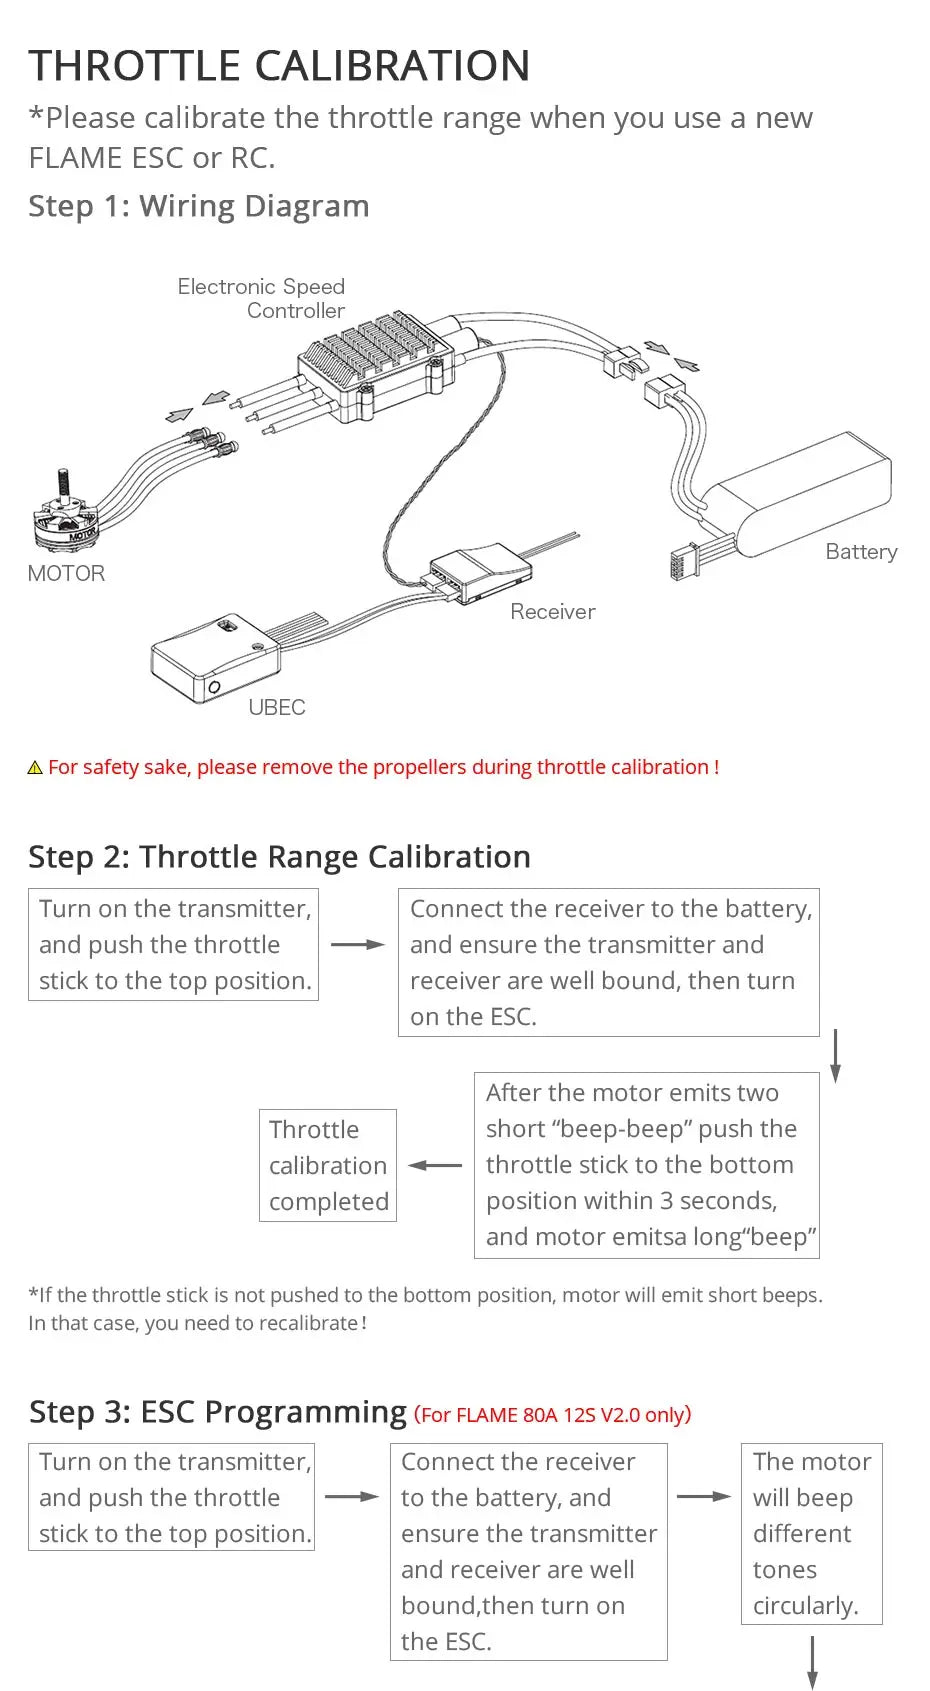 T-MOTOR Flame 200A ESC, #Please calibrate the throttle range when you use a new FLAME ESC or 